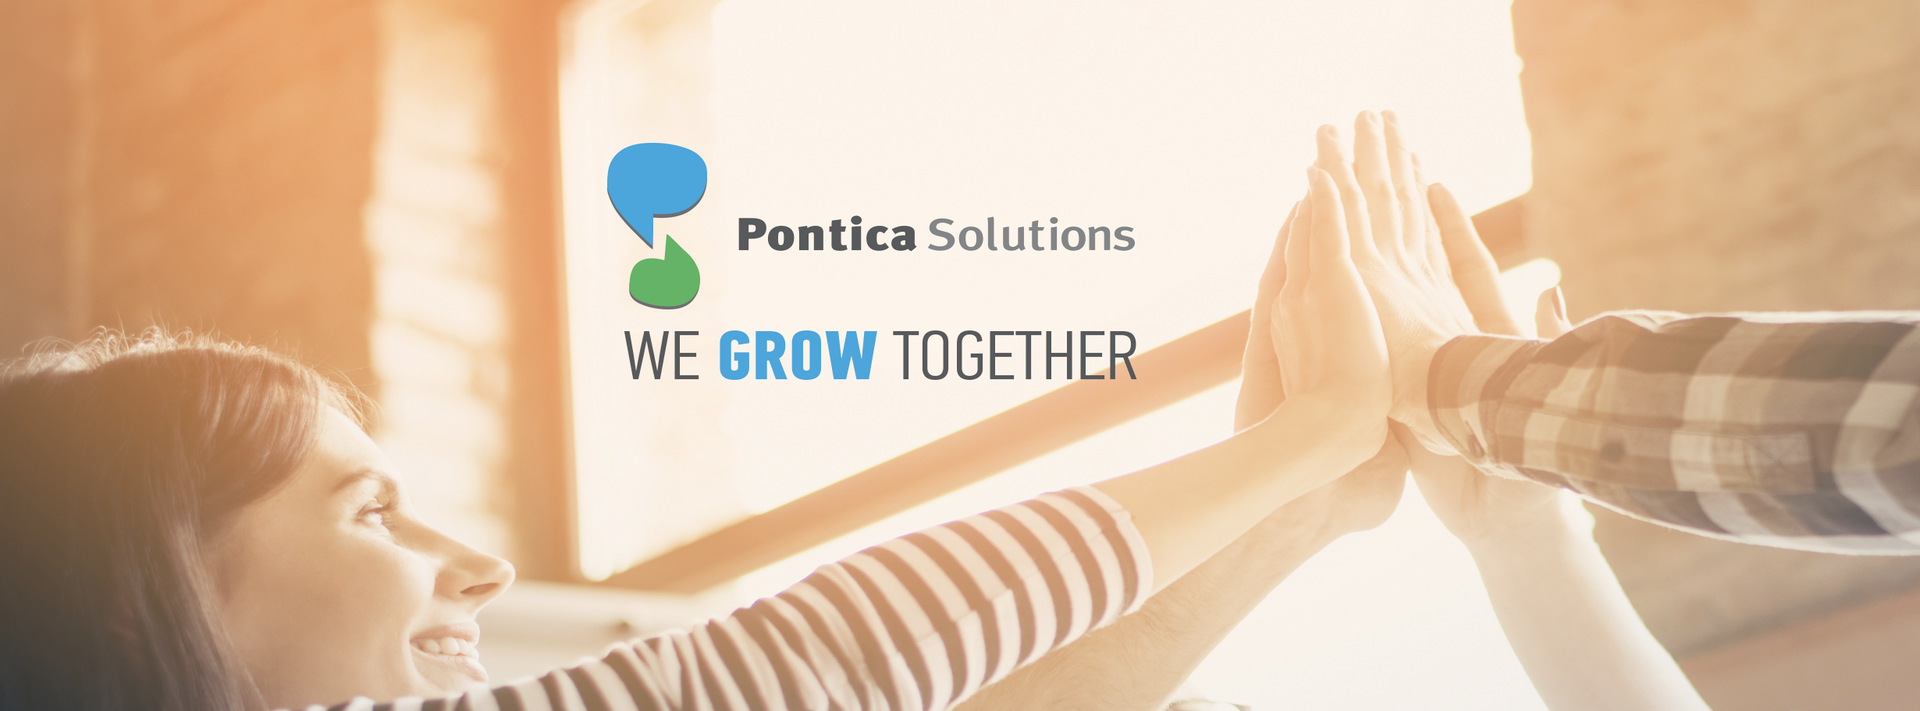 Pontica Solutions Ltd. 